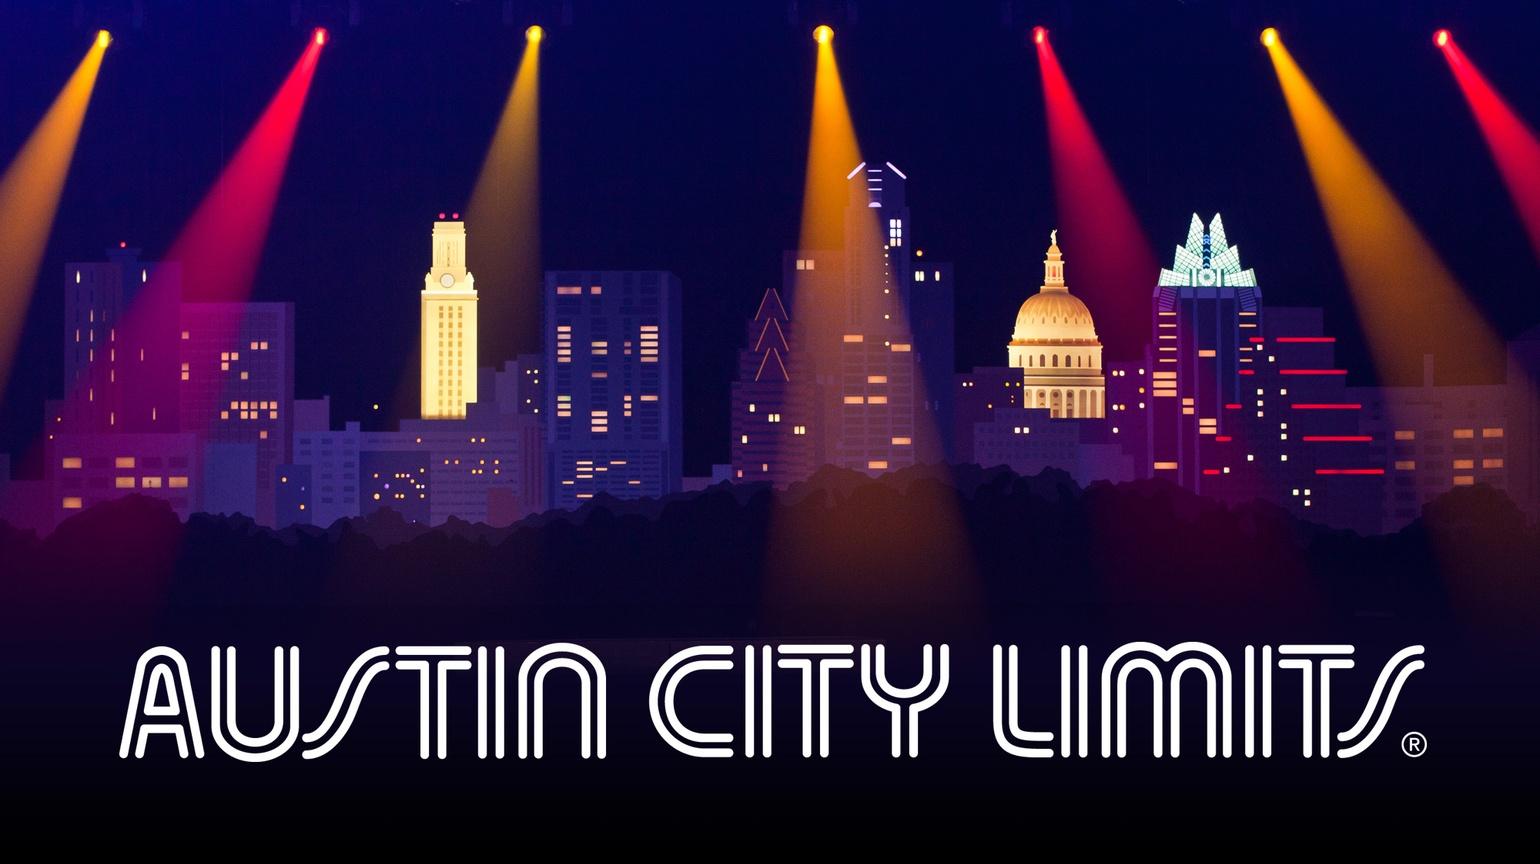 americana music festival Archives - Austin City Limits